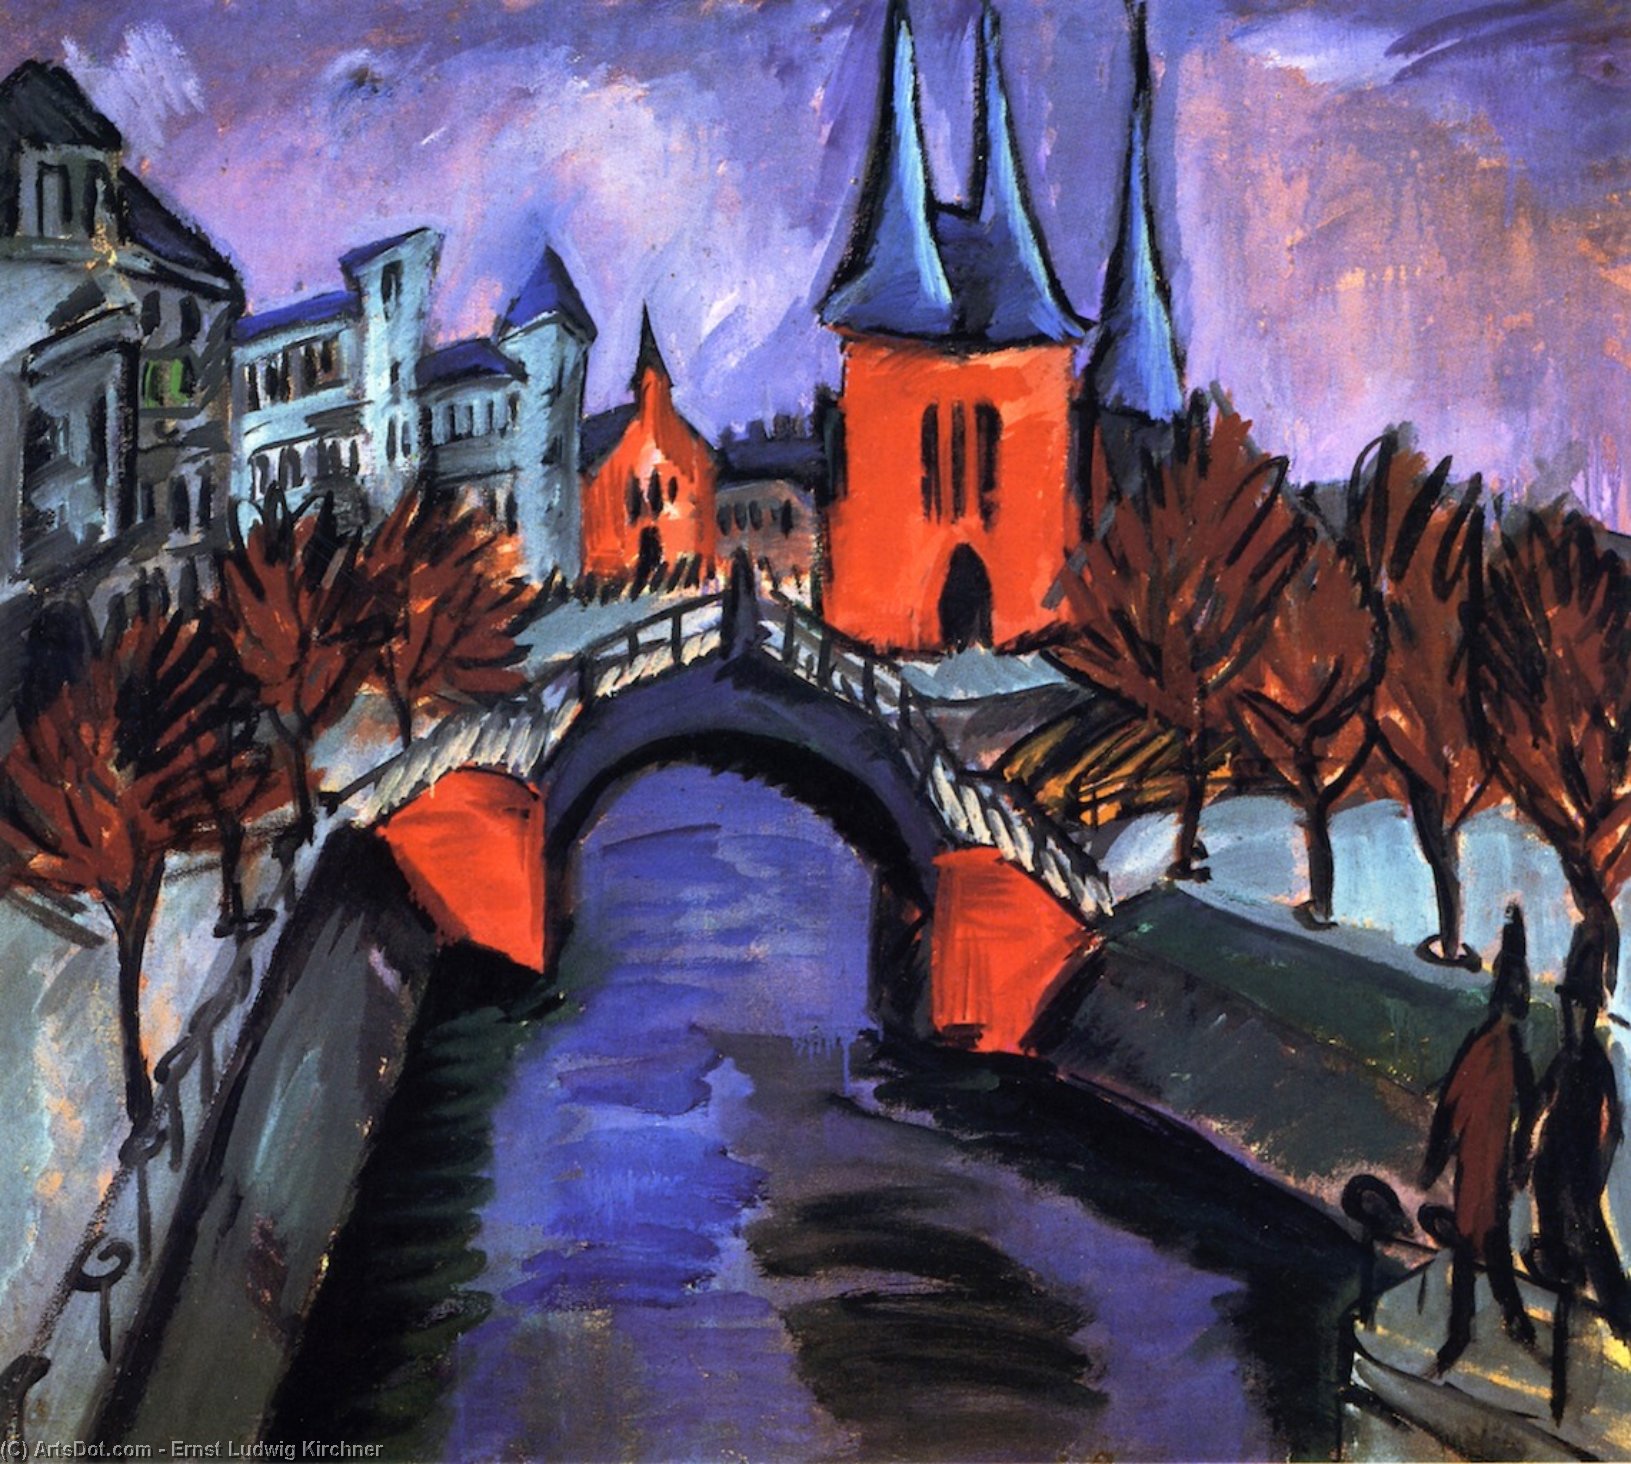 Wikioo.org – L'Encyclopédie des Beaux Arts - Peinture, Oeuvre de Ernst Ludwig Kirchner - rotes eilsabethufer , Berlin